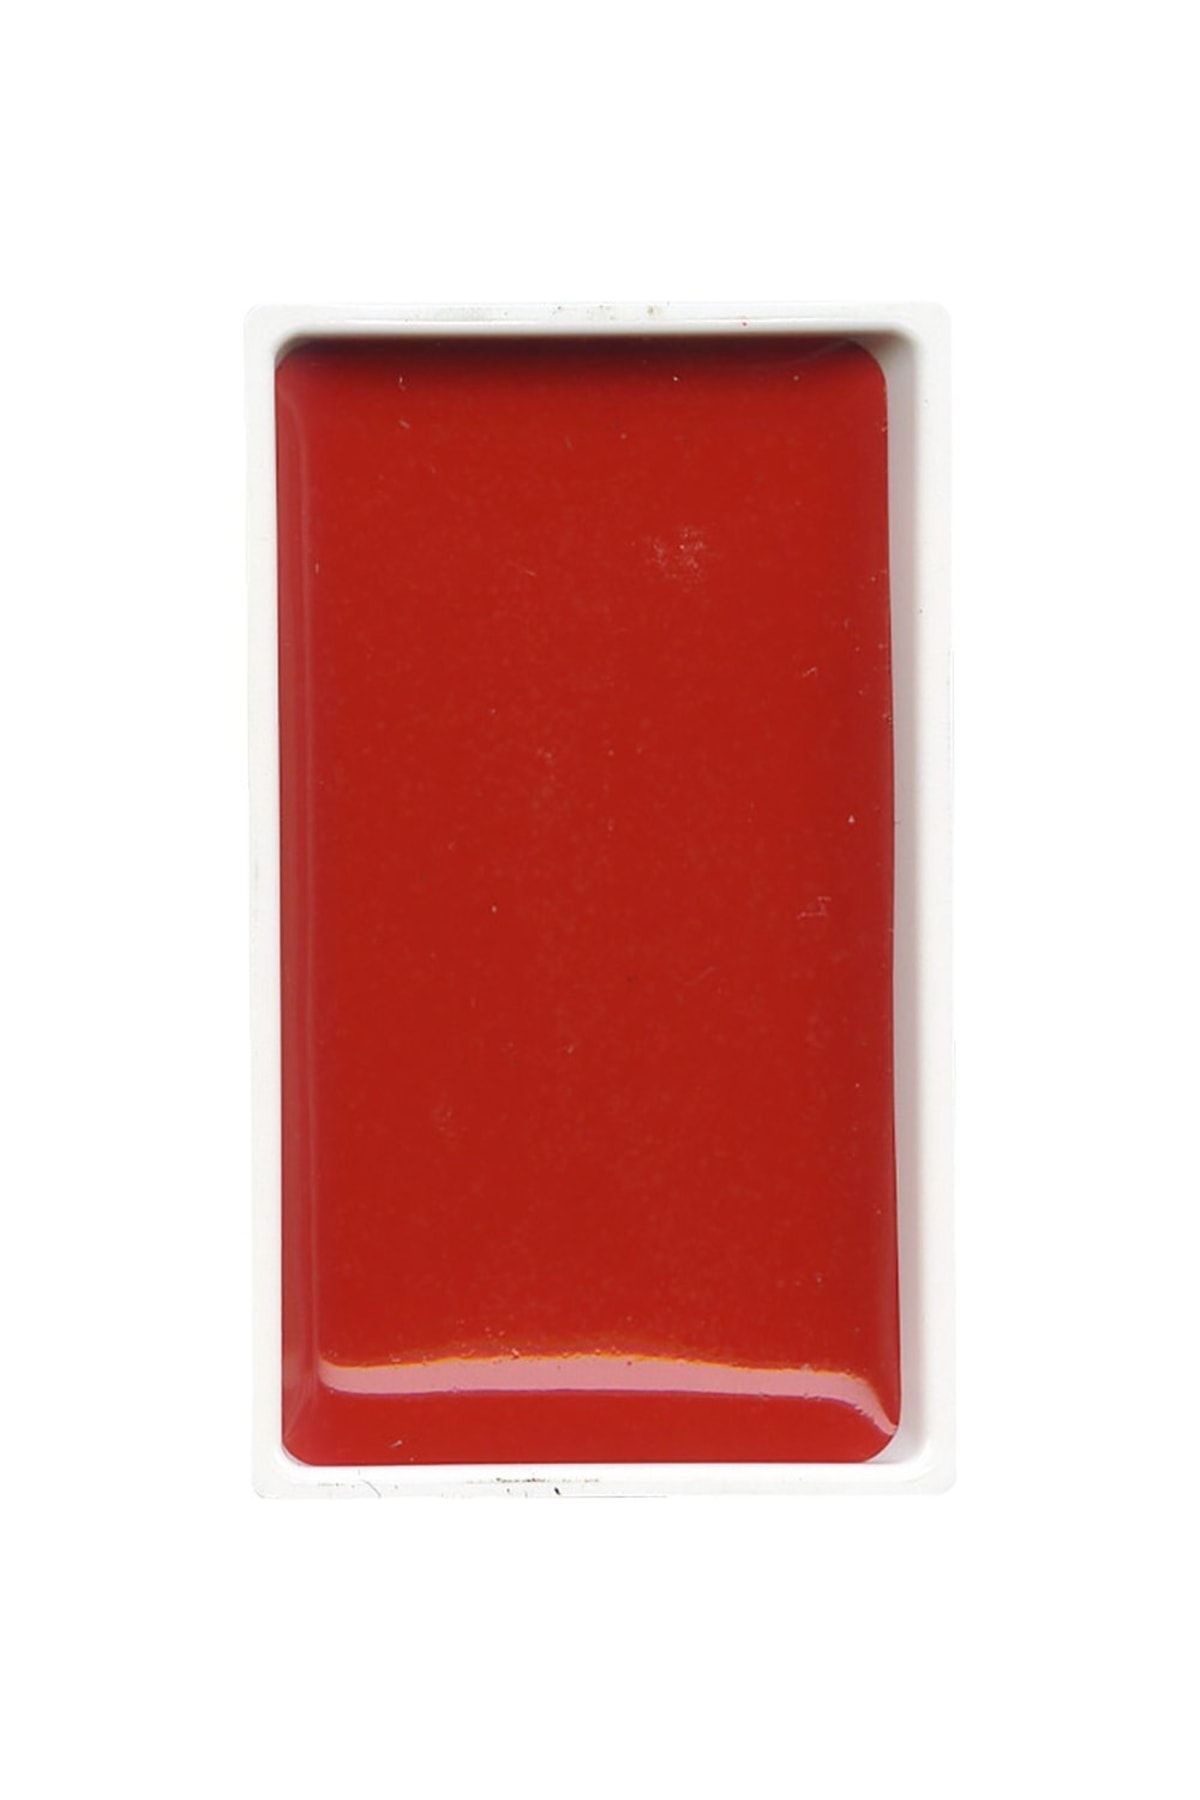 Zig Gansai Tambi Suluboya Tablet No 30 Cadmium Red